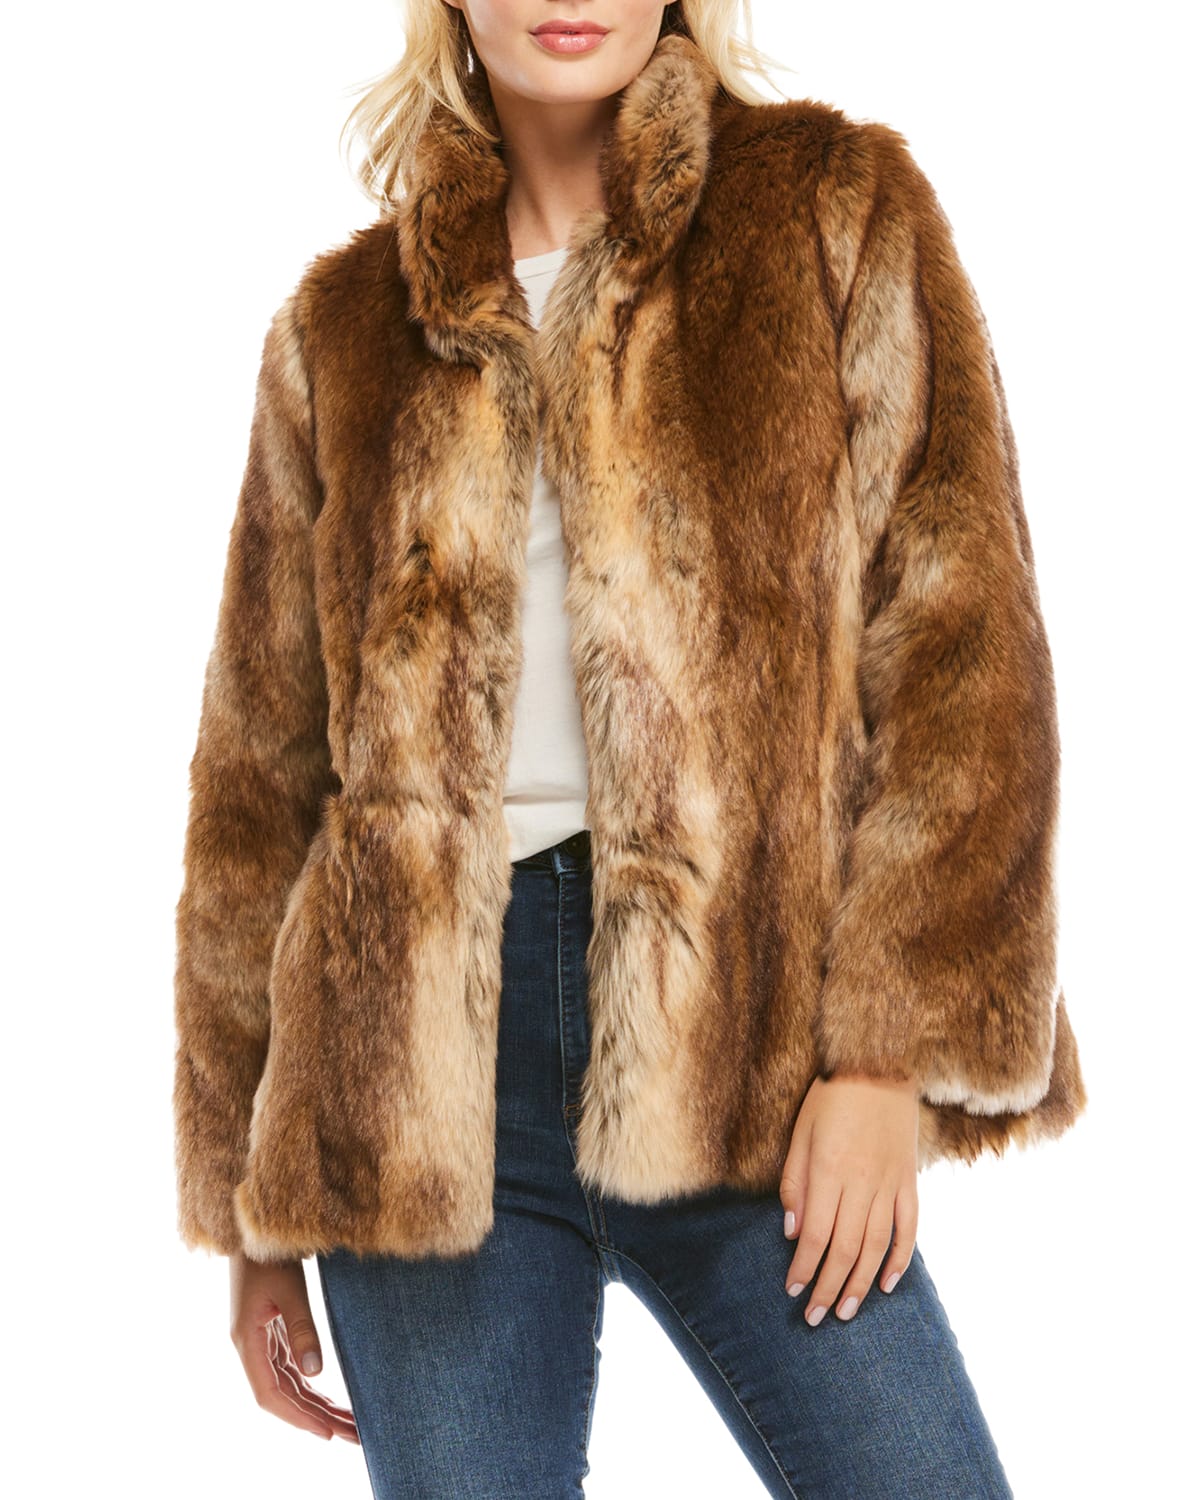 Fabulous Furs Favorite Faux Fur Jacket